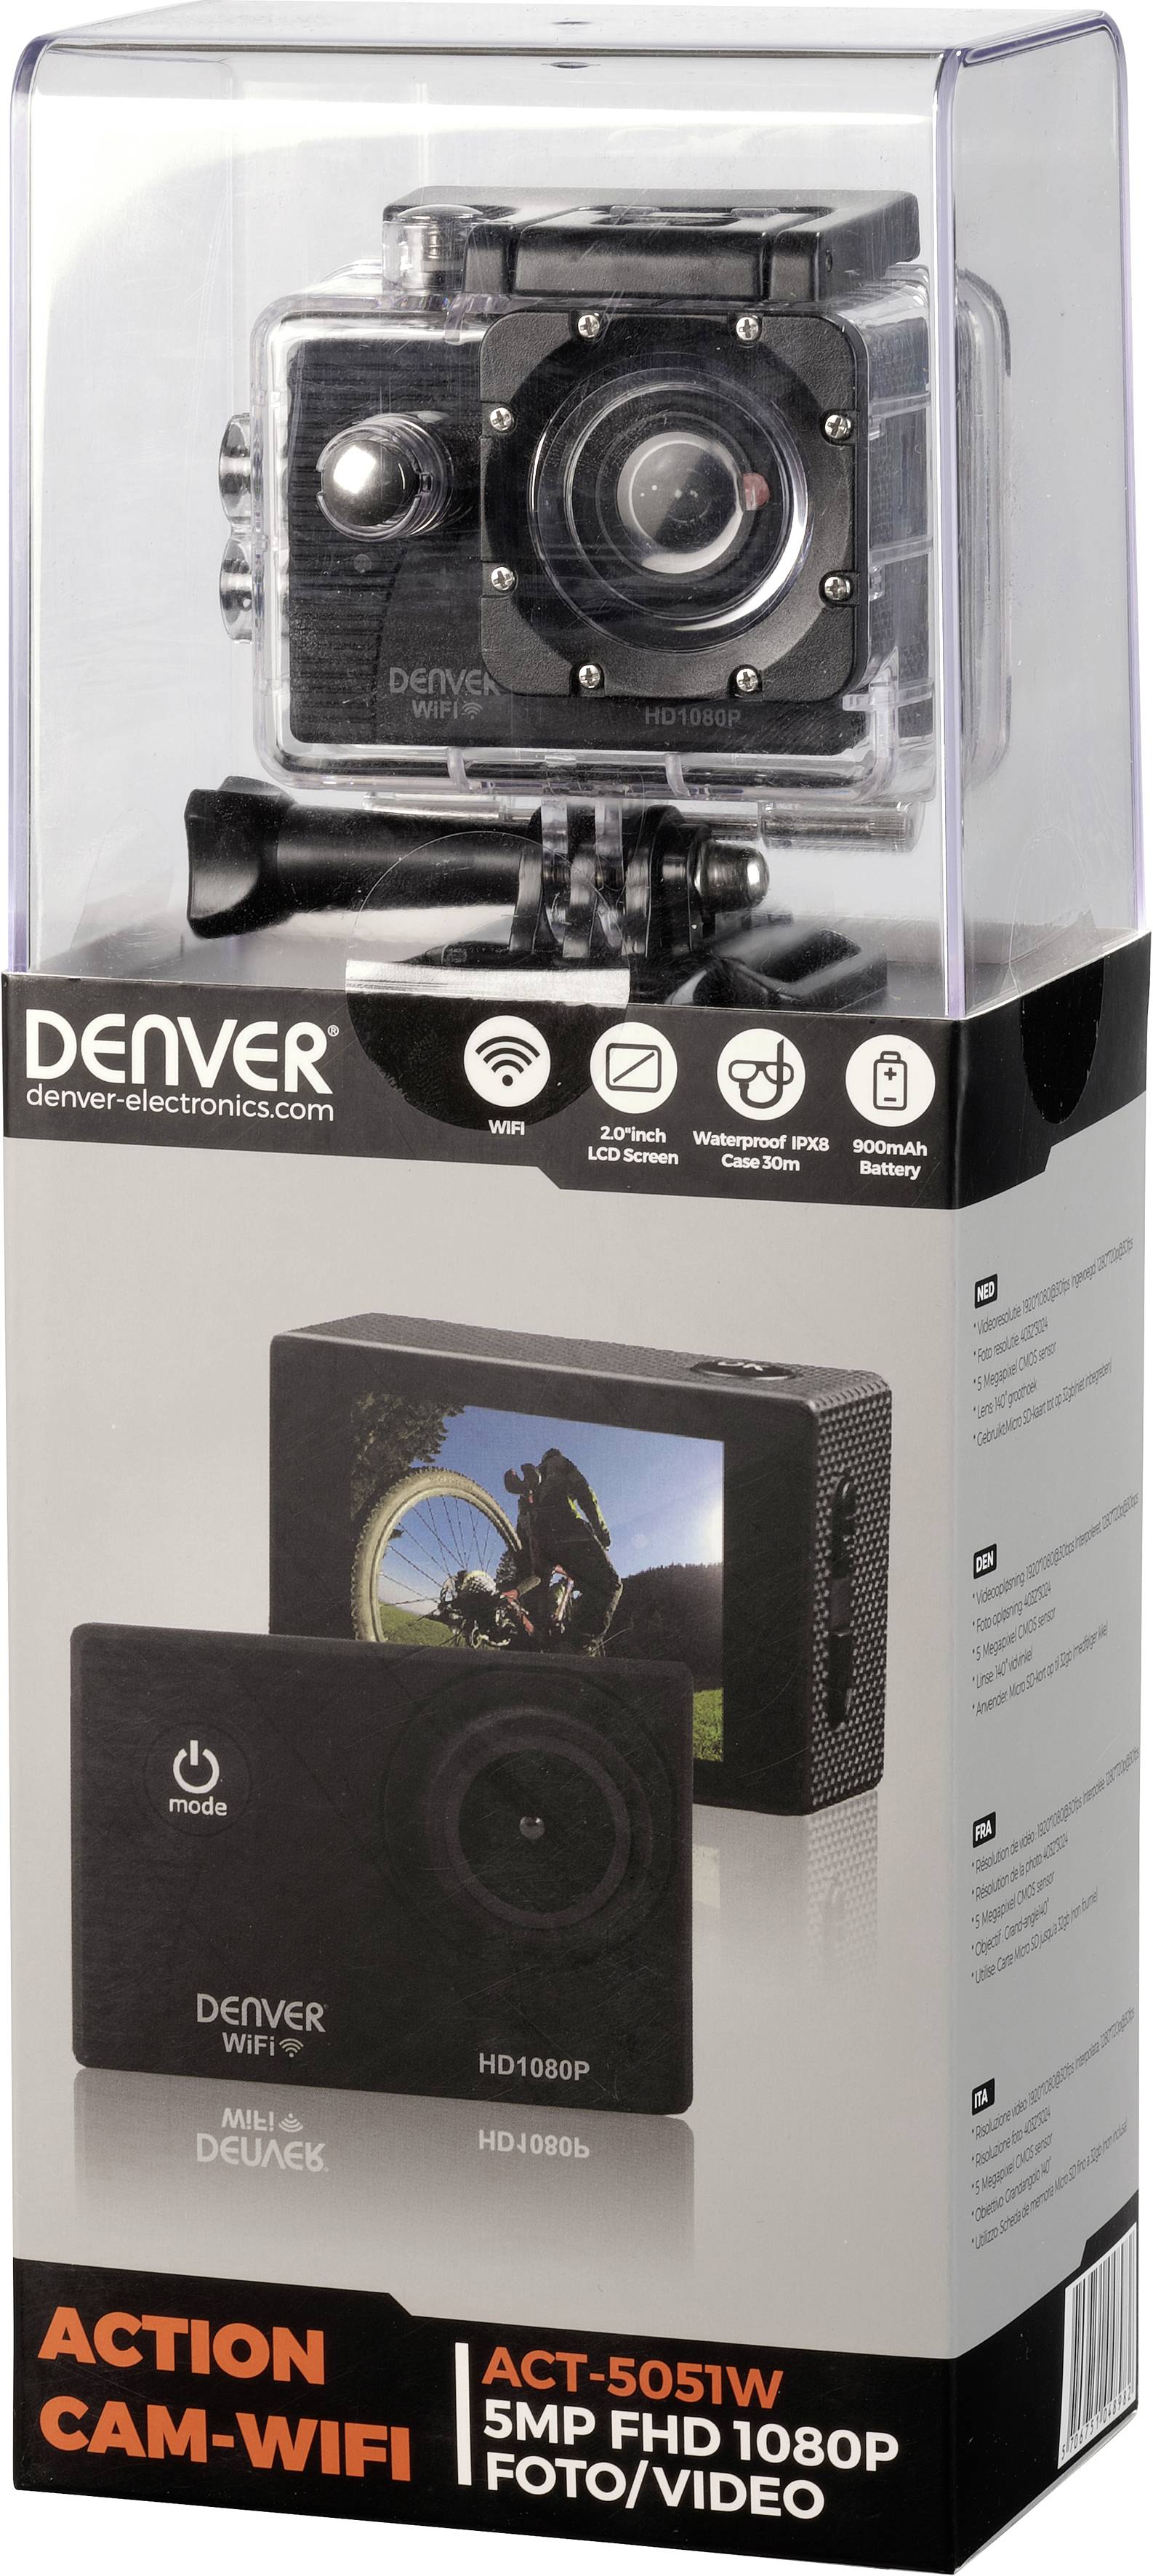 1,7 Zoll 5 Megapixel, 3,3 cm Display, CMOS Sensor, USB wasserdichtem Gehäuse bis 10 m Denver HD Actioncam inkl 